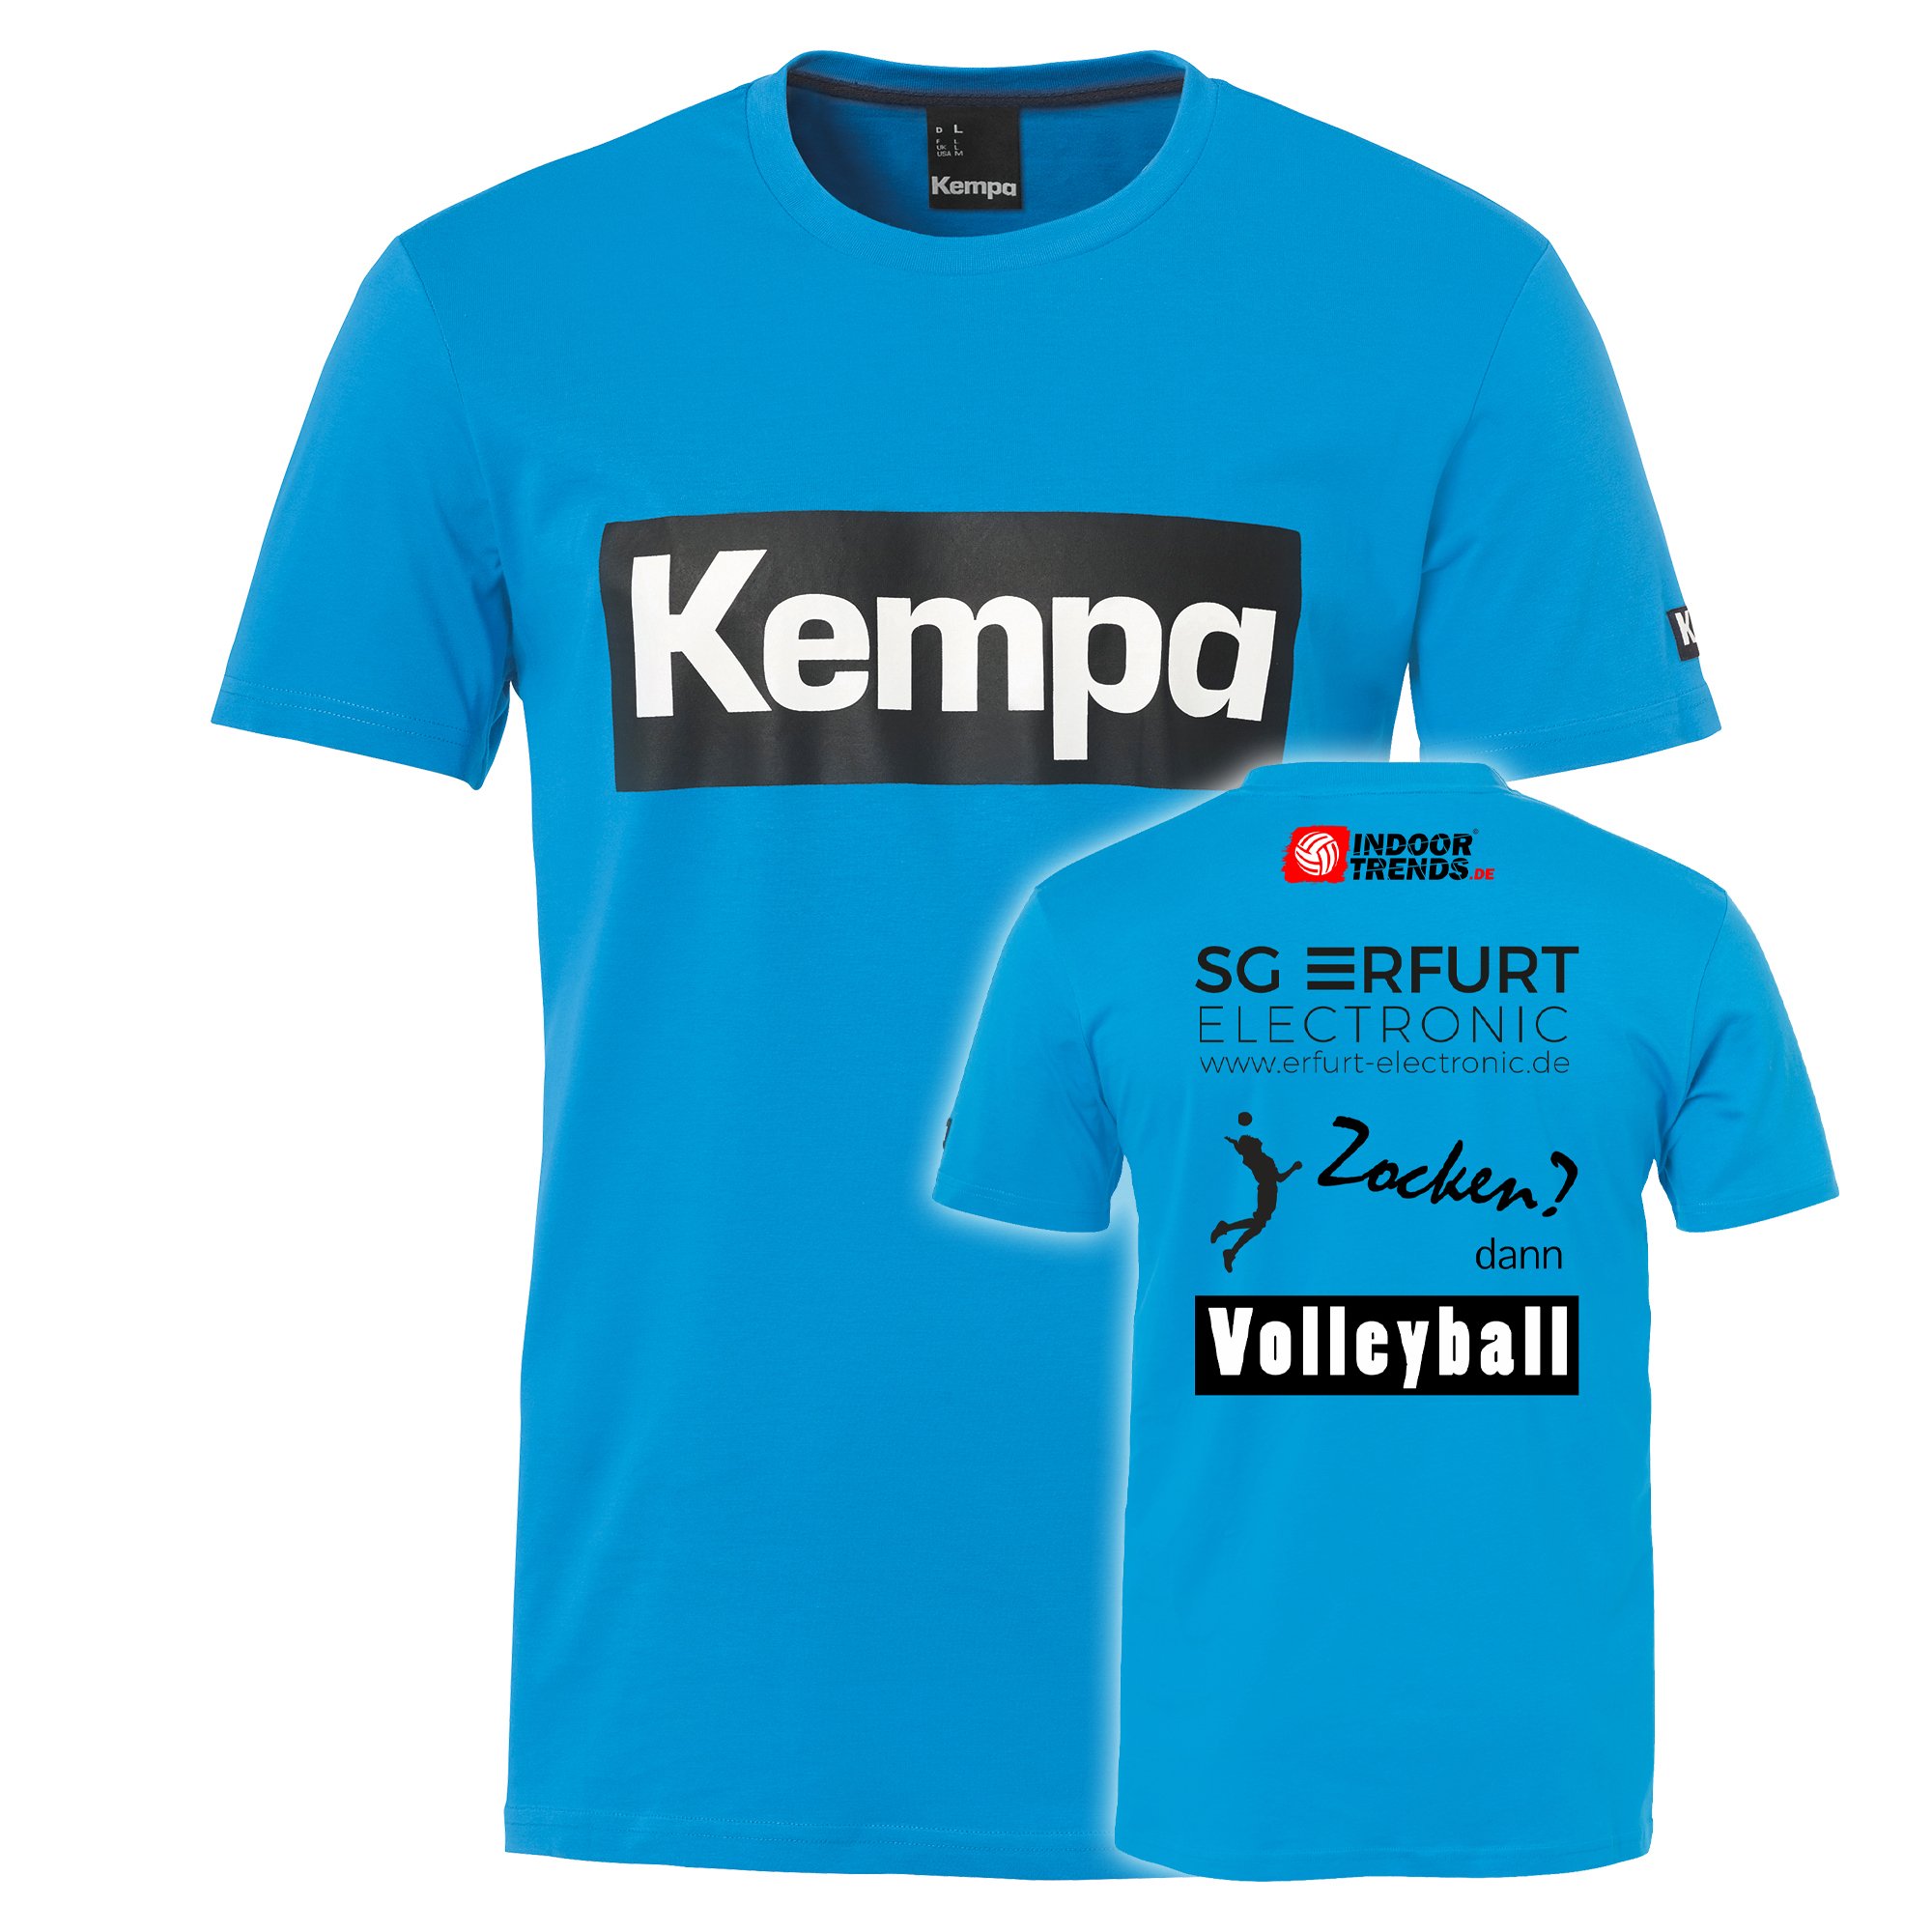 SG Erfurt Electronic T-Shirt